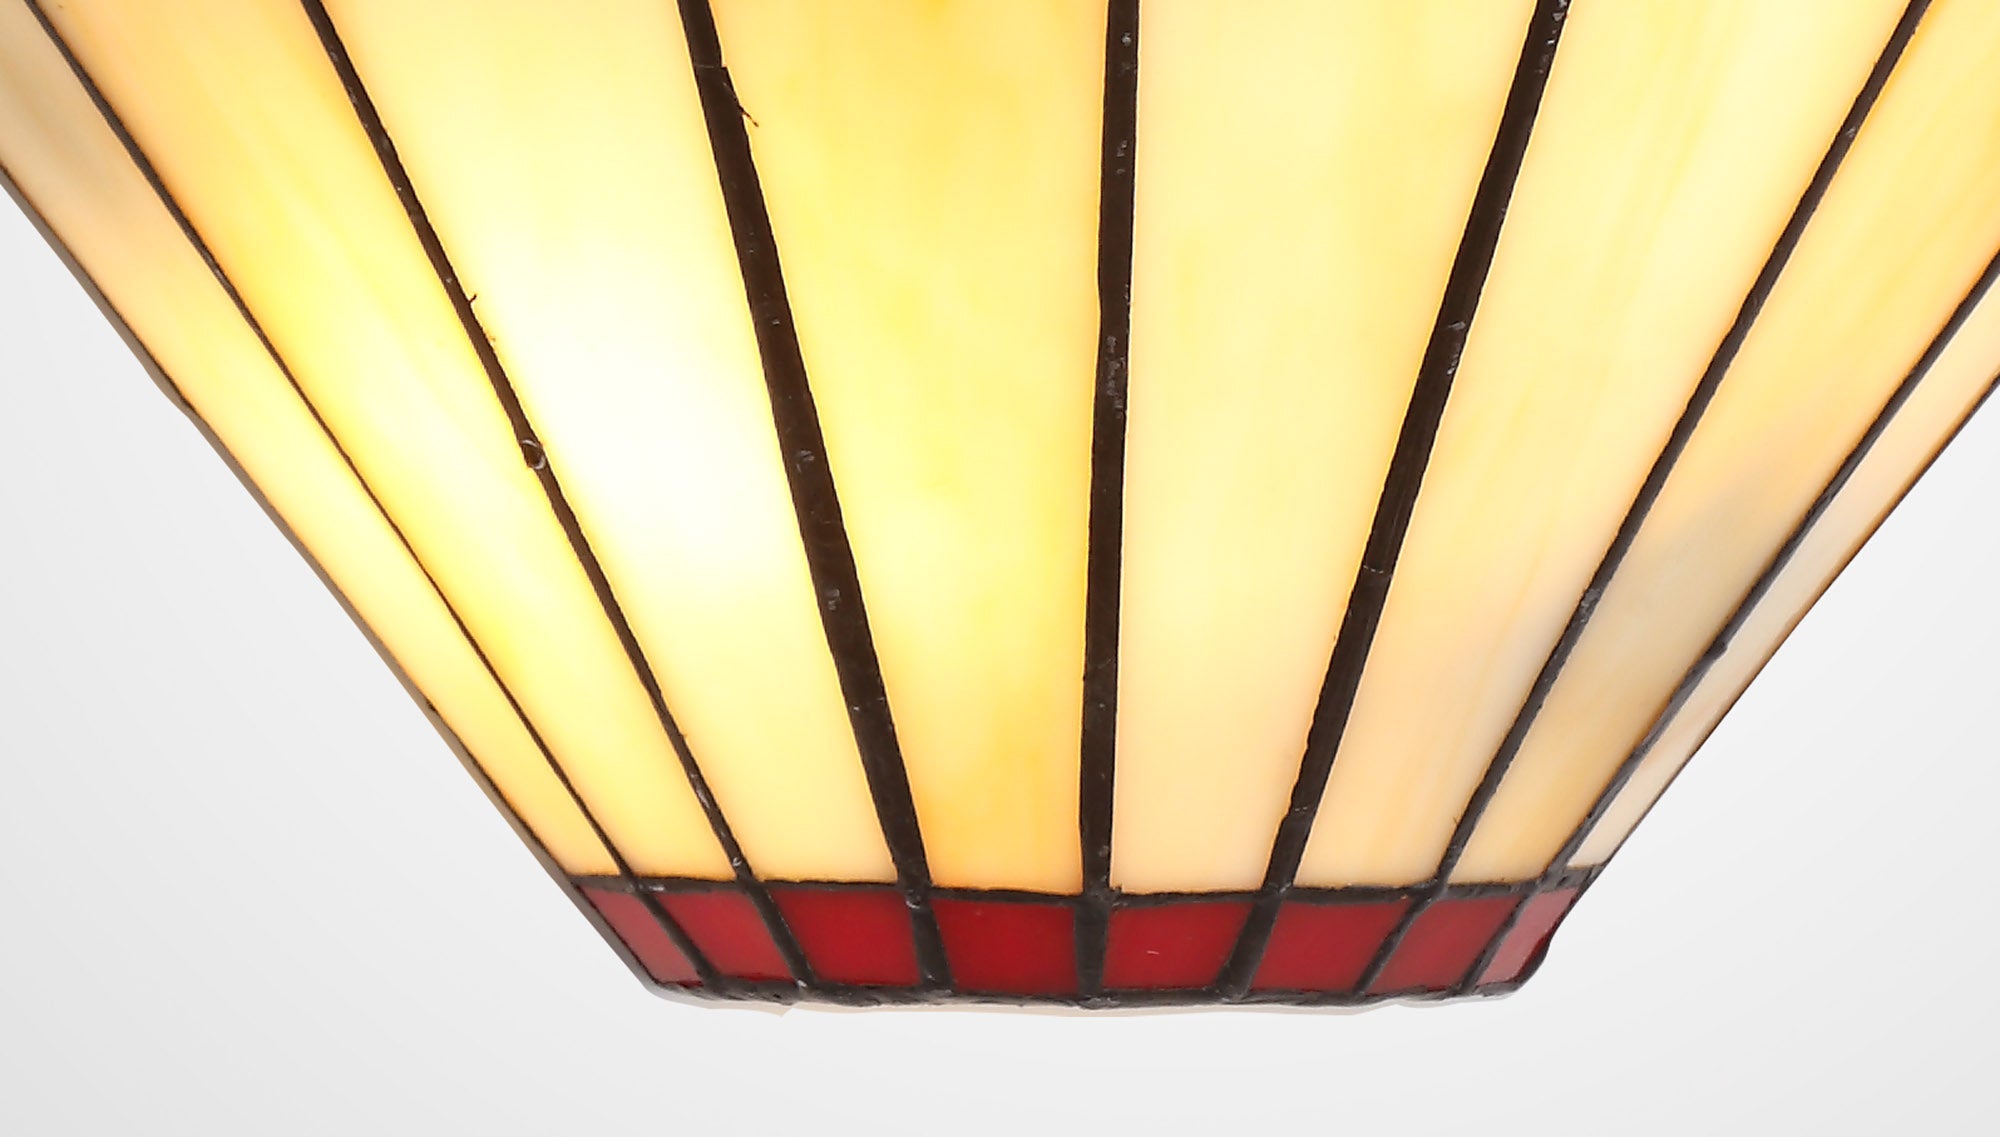 Umbrella Tiffany Wall Lamp, 2 x E14, Red/Crealm/Crystal